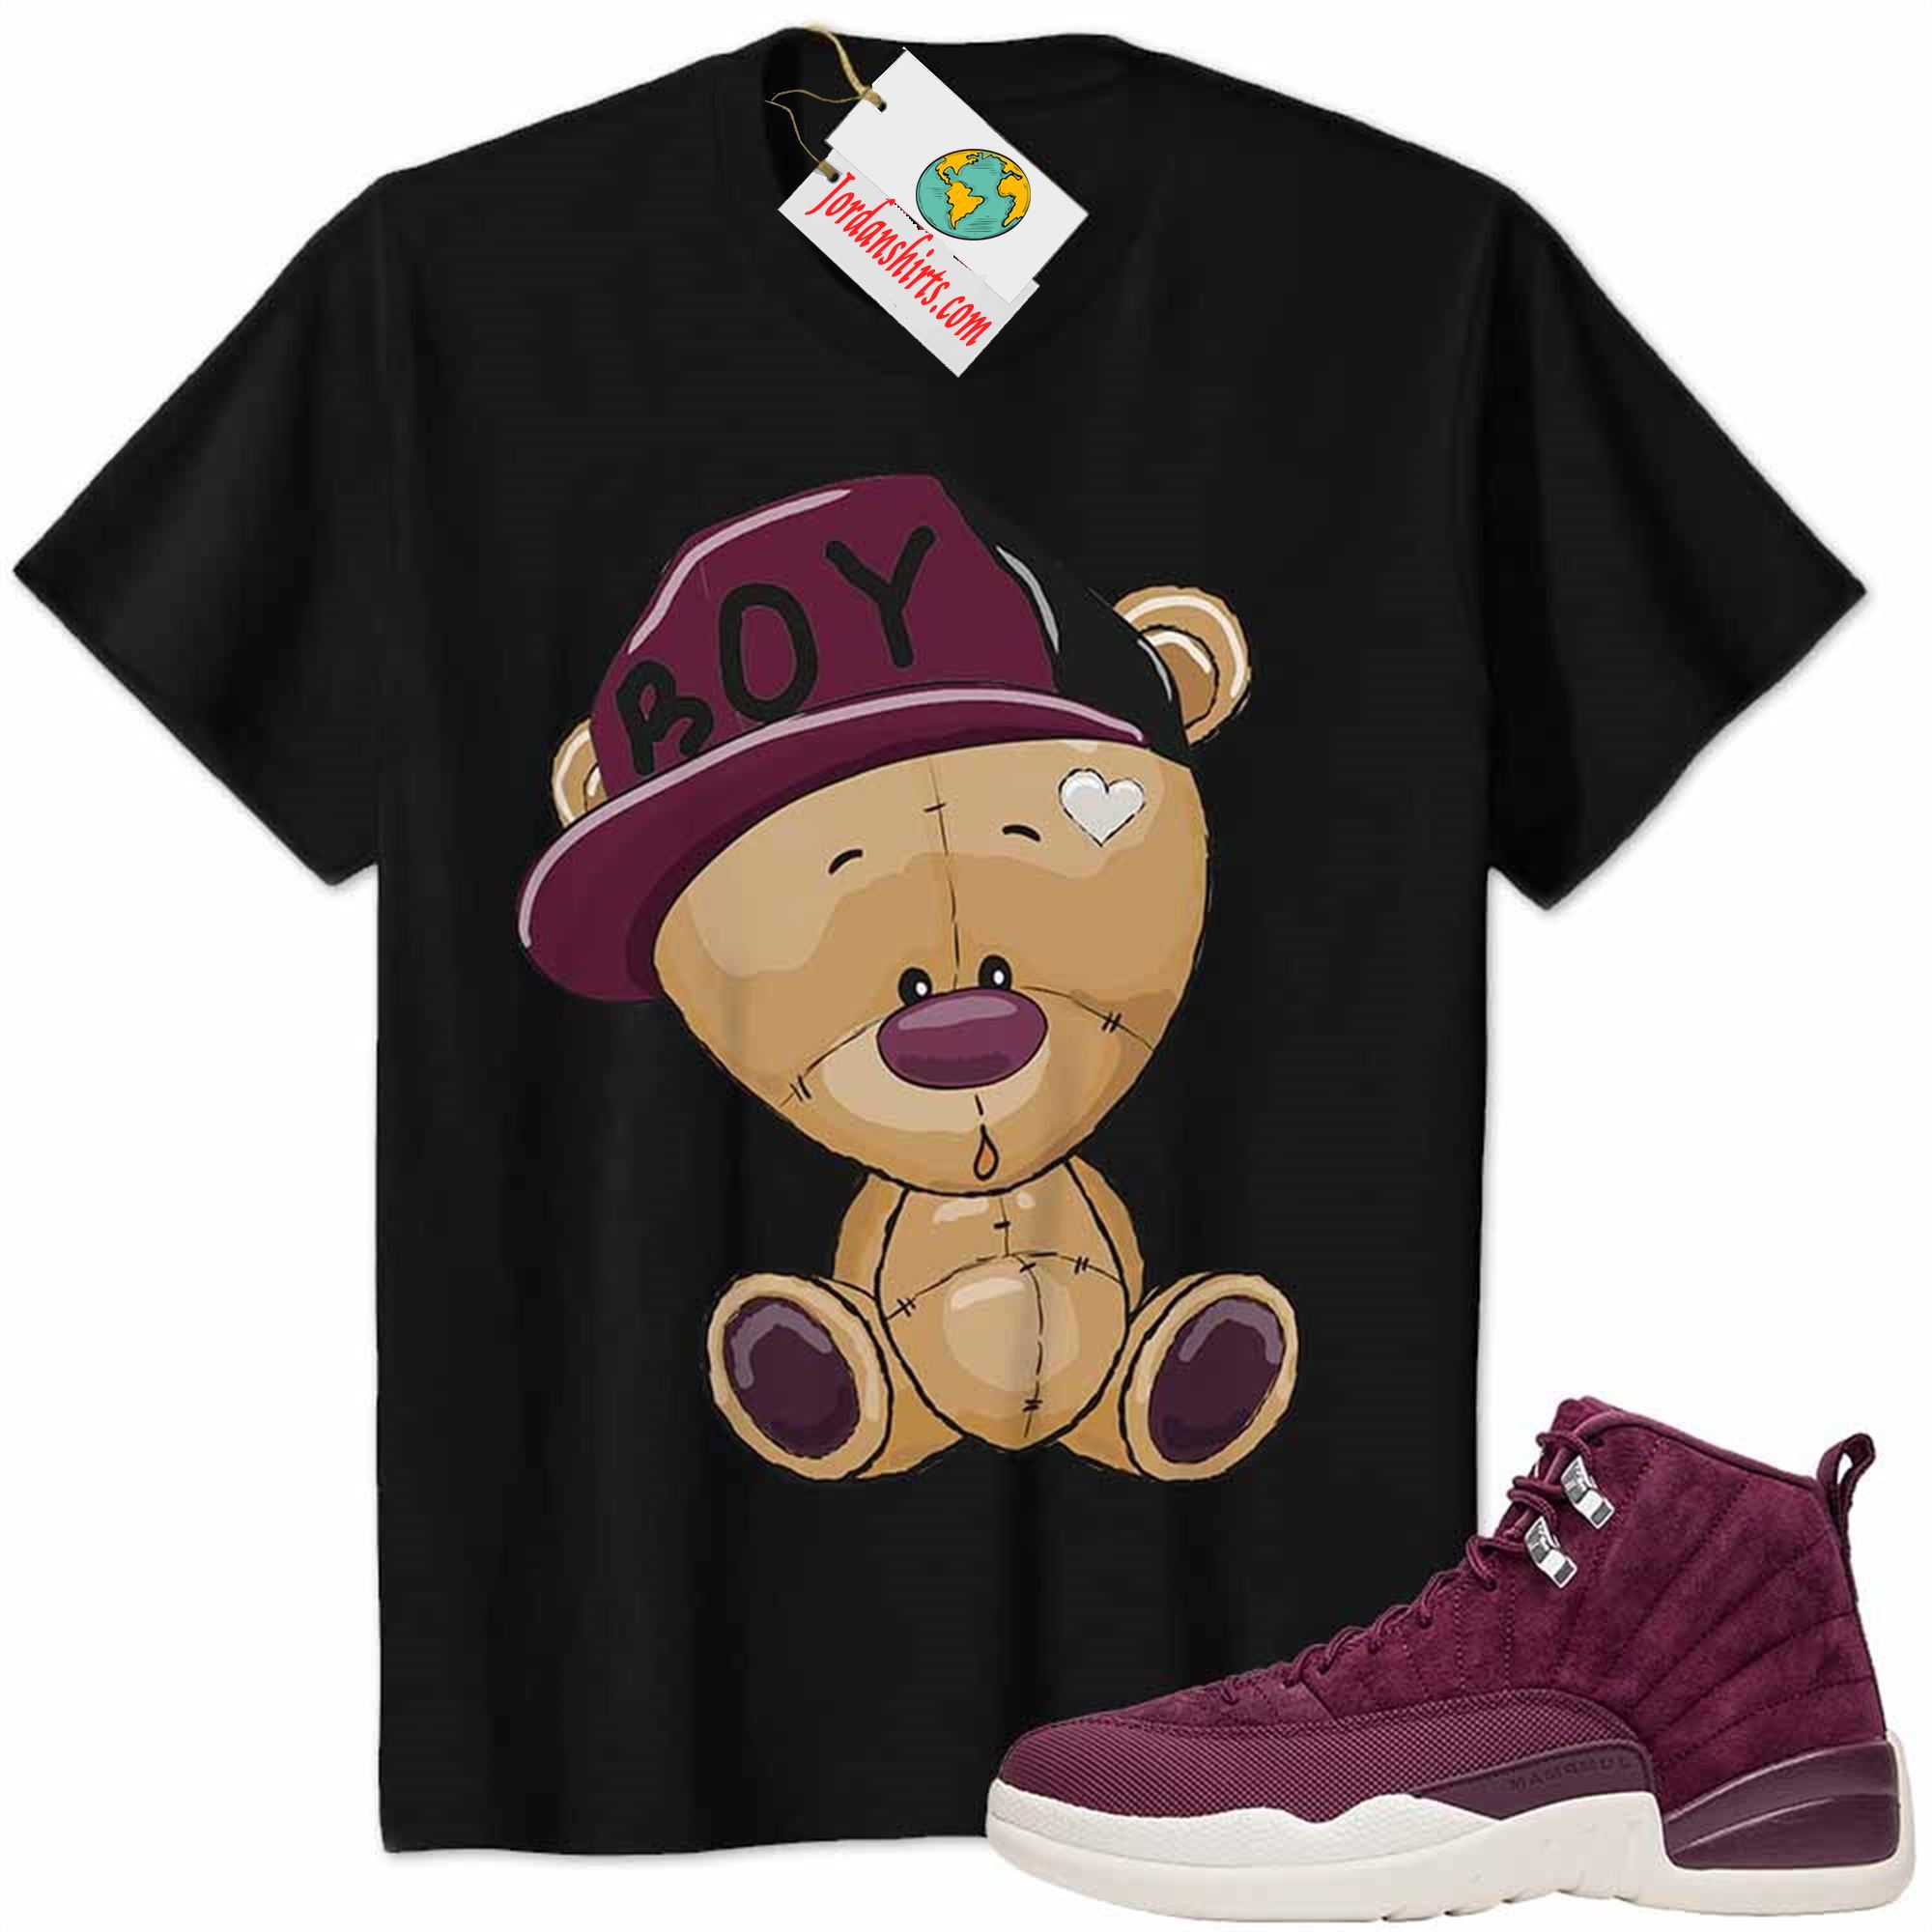 Jordan 12 Shirt, Jordan 12 Bordeaux Shirt Cute Baby Teddy Bear Black Plus Size Up To 5xl